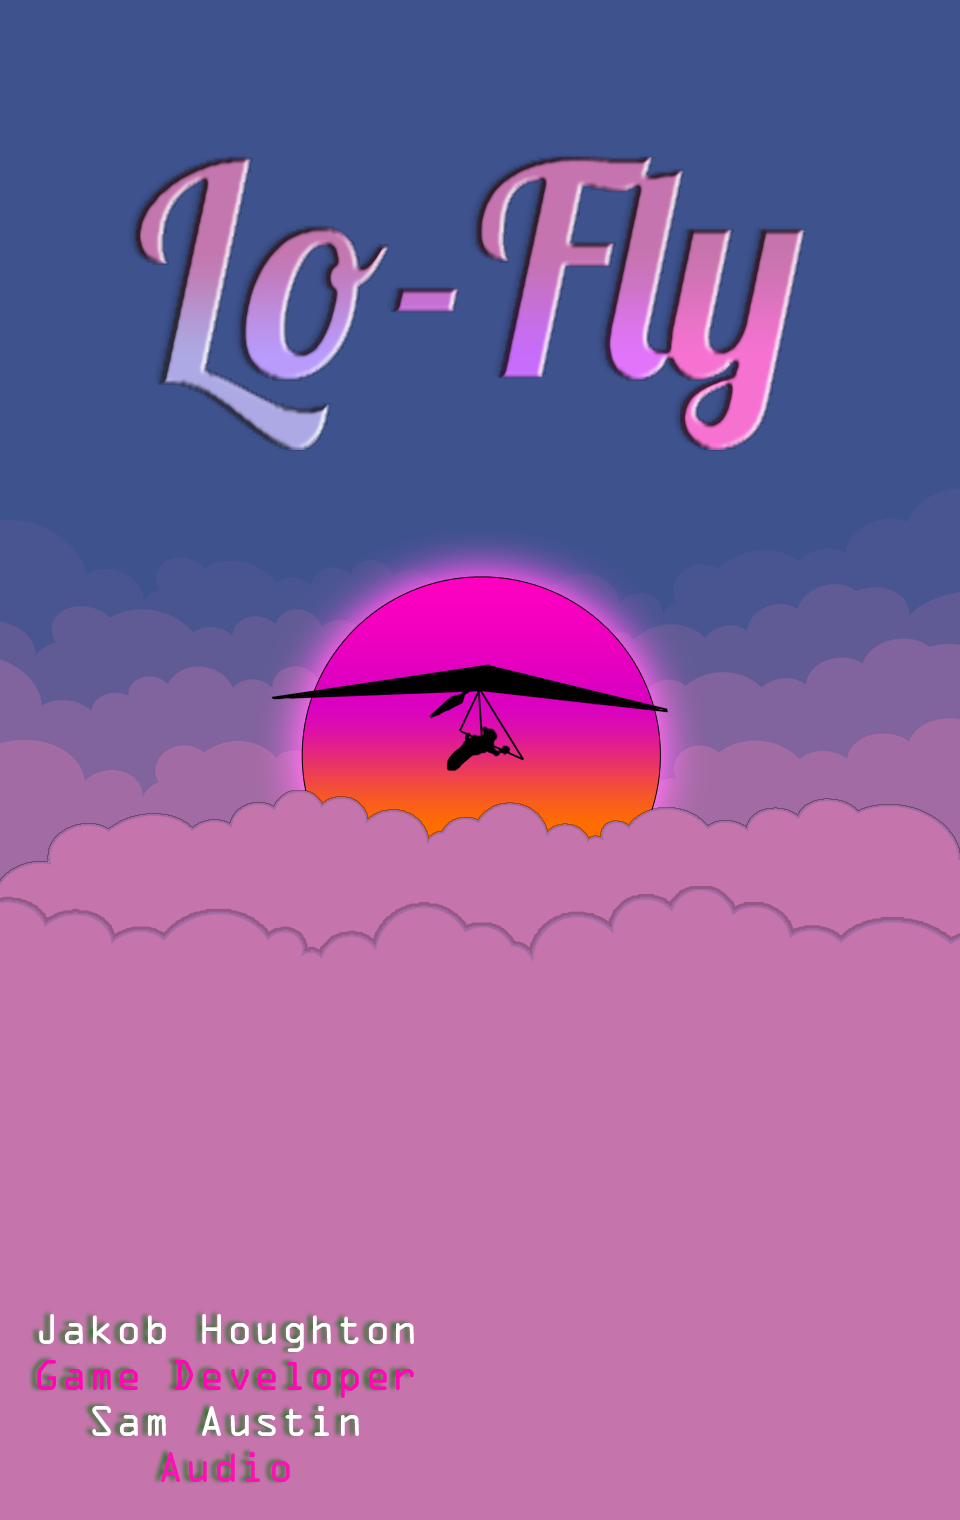 Lo-Fly